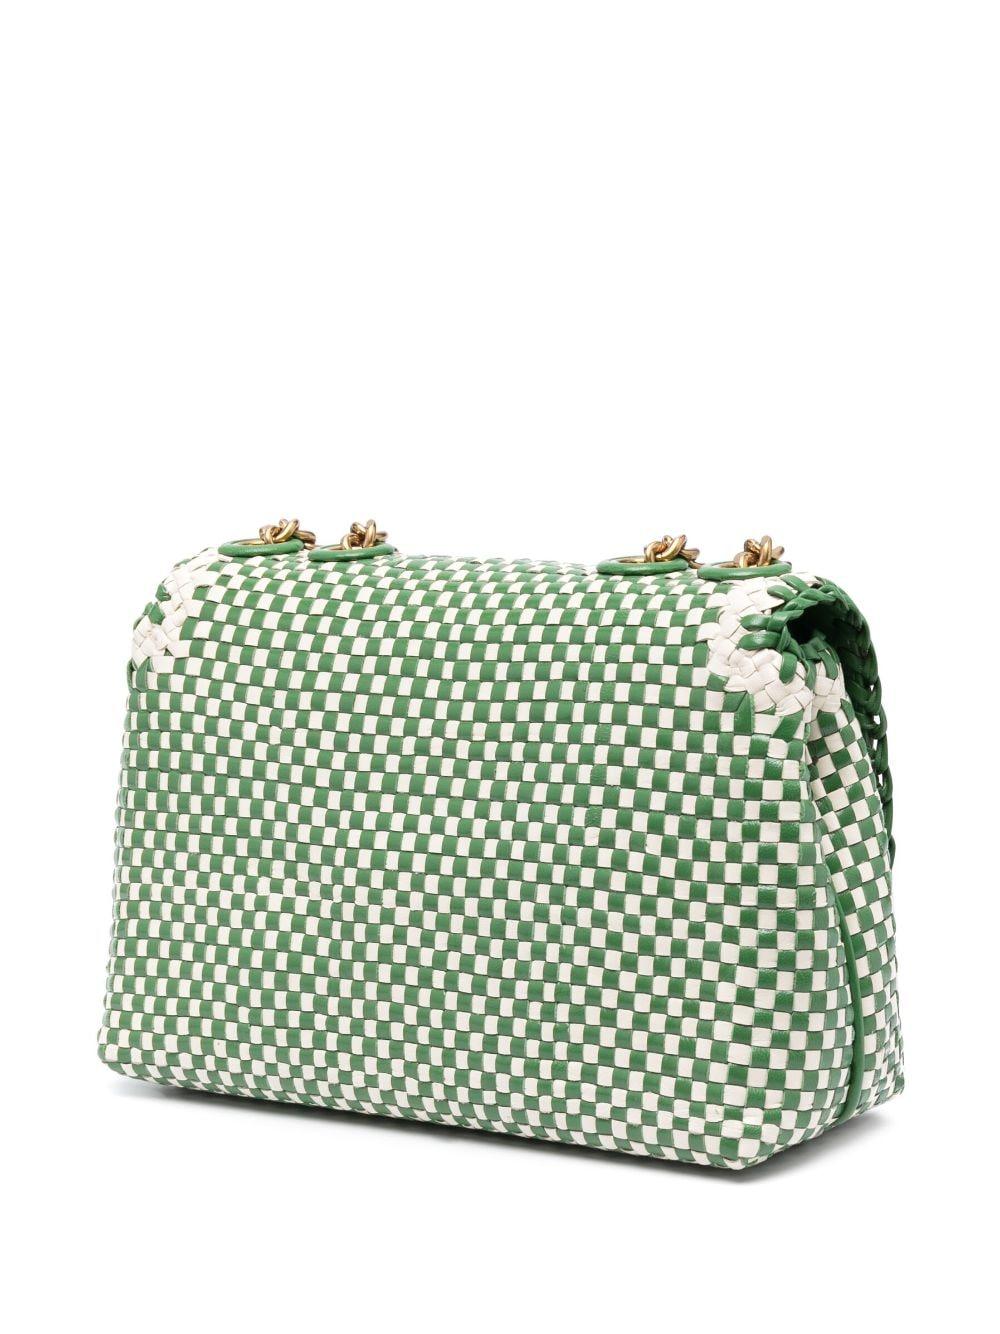 Tory Burch Small Kira Crochet Shoulder Bag - Farfetch